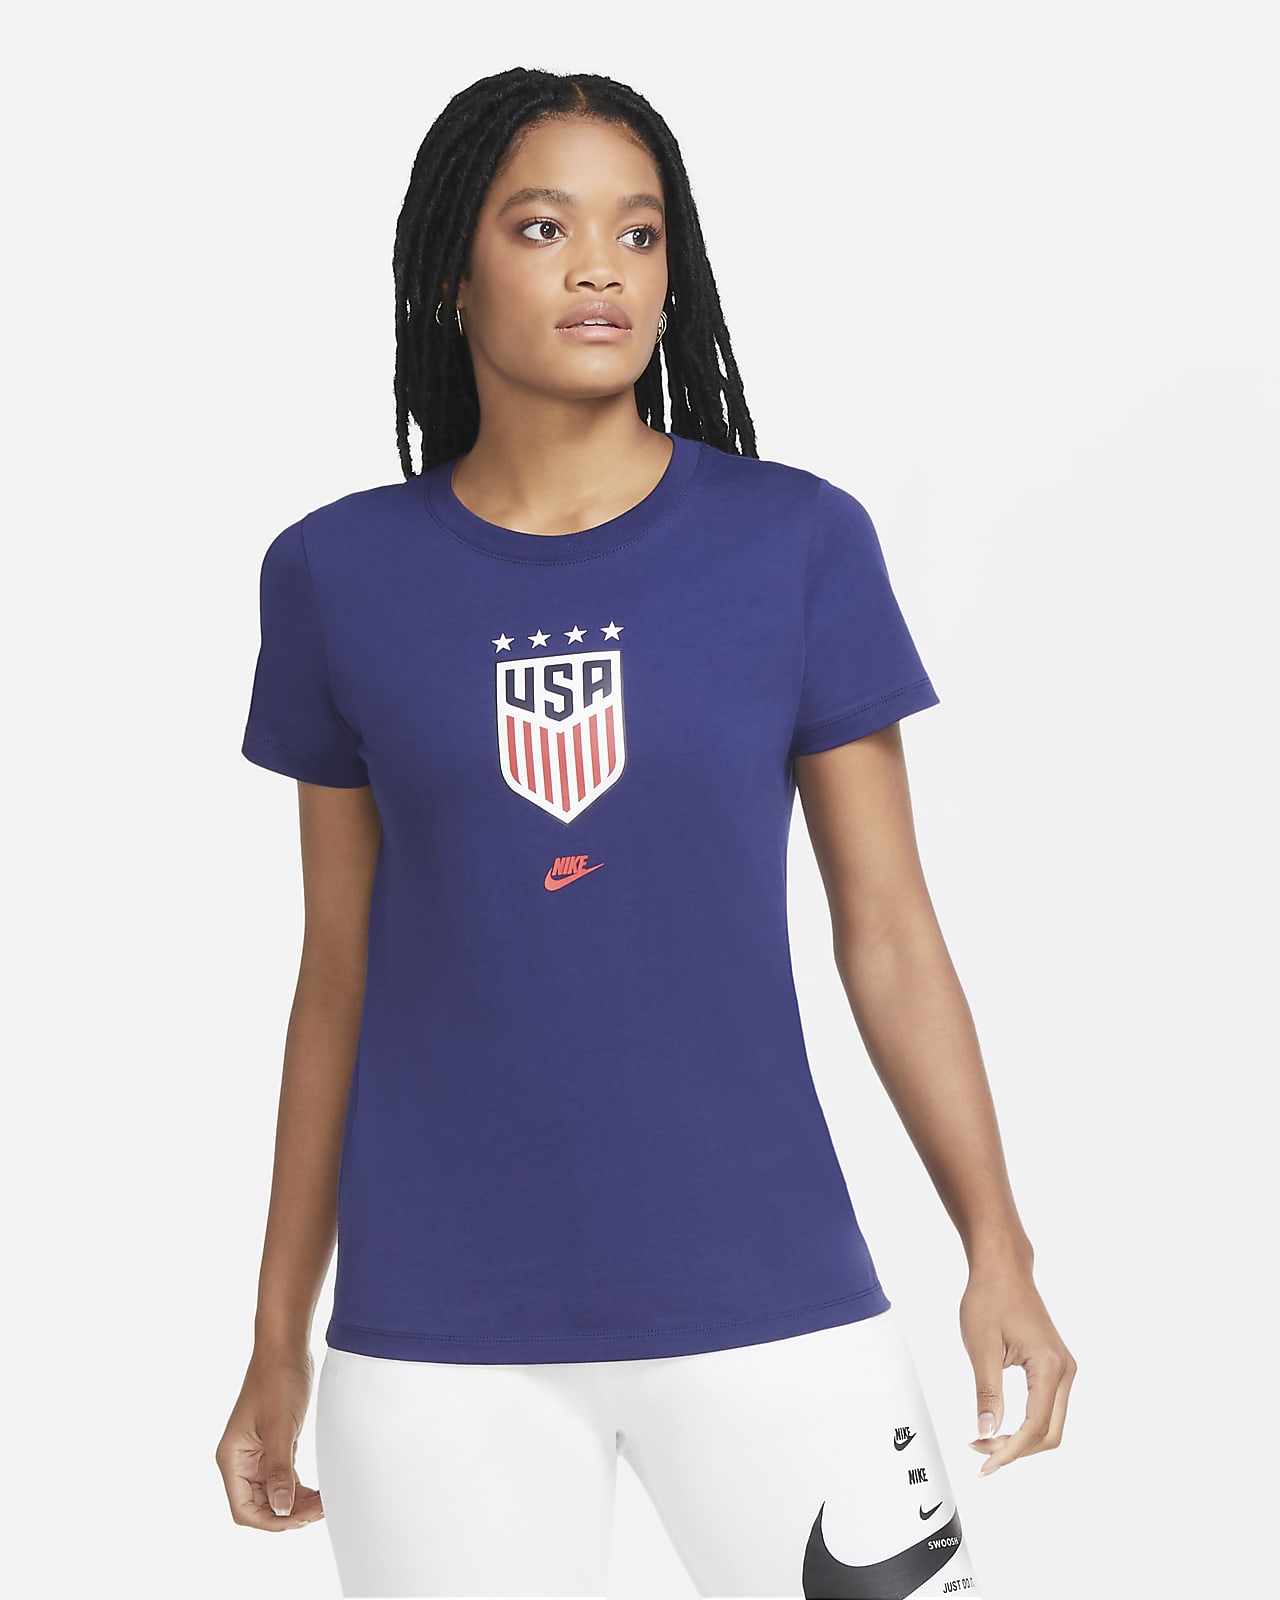 nike us women's soccer t shirt